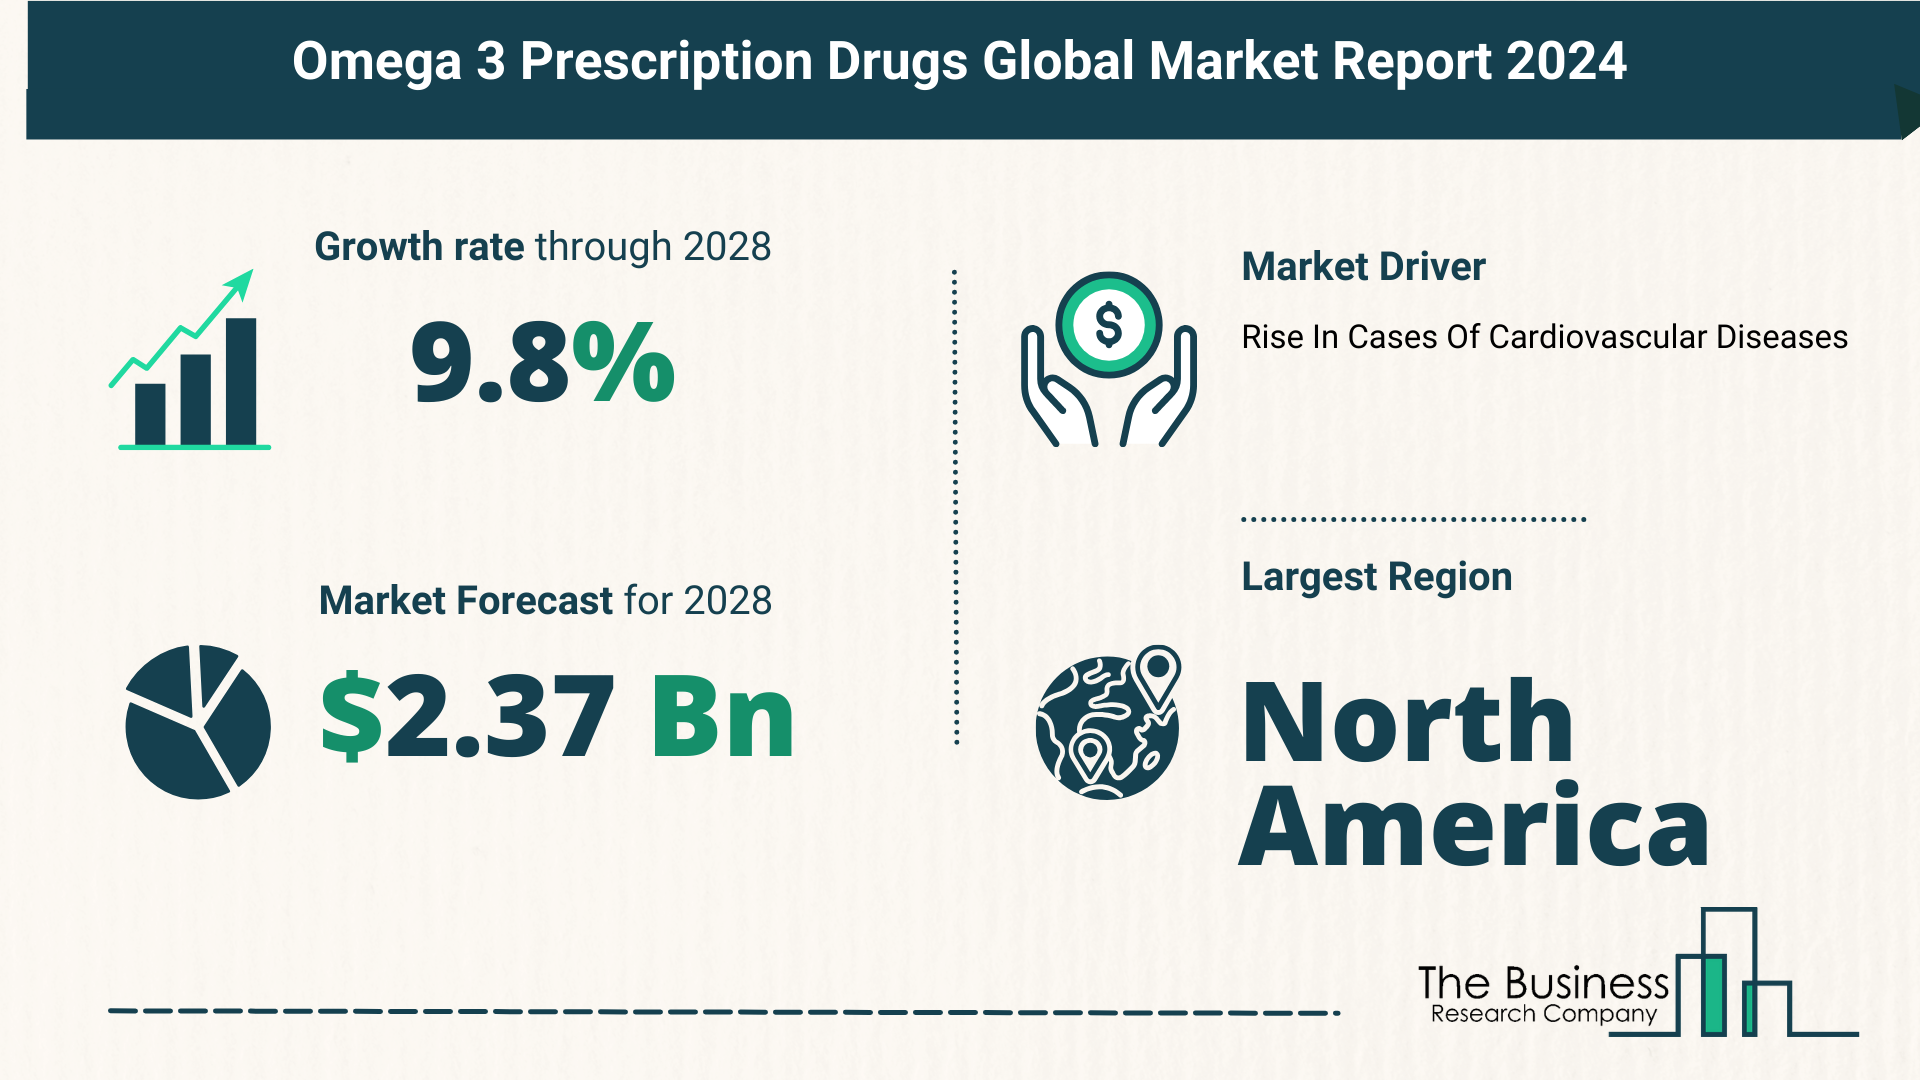 Global Omega 3 Prescription Drugs Market